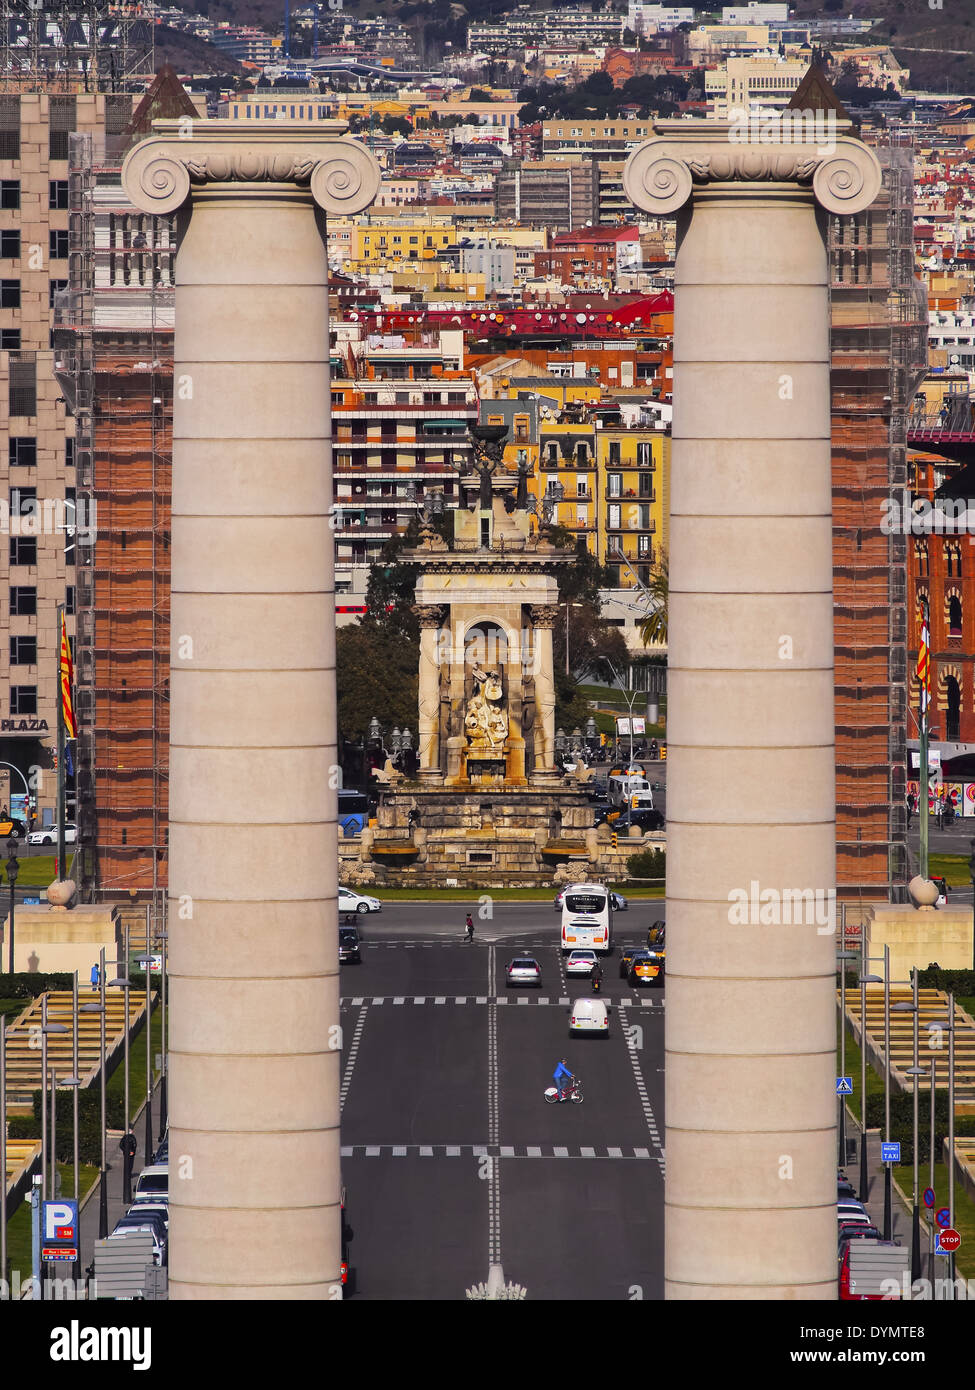 Placa Espanya - Spanish Square in Barcelona, Catalonia, Spain Stock Photo